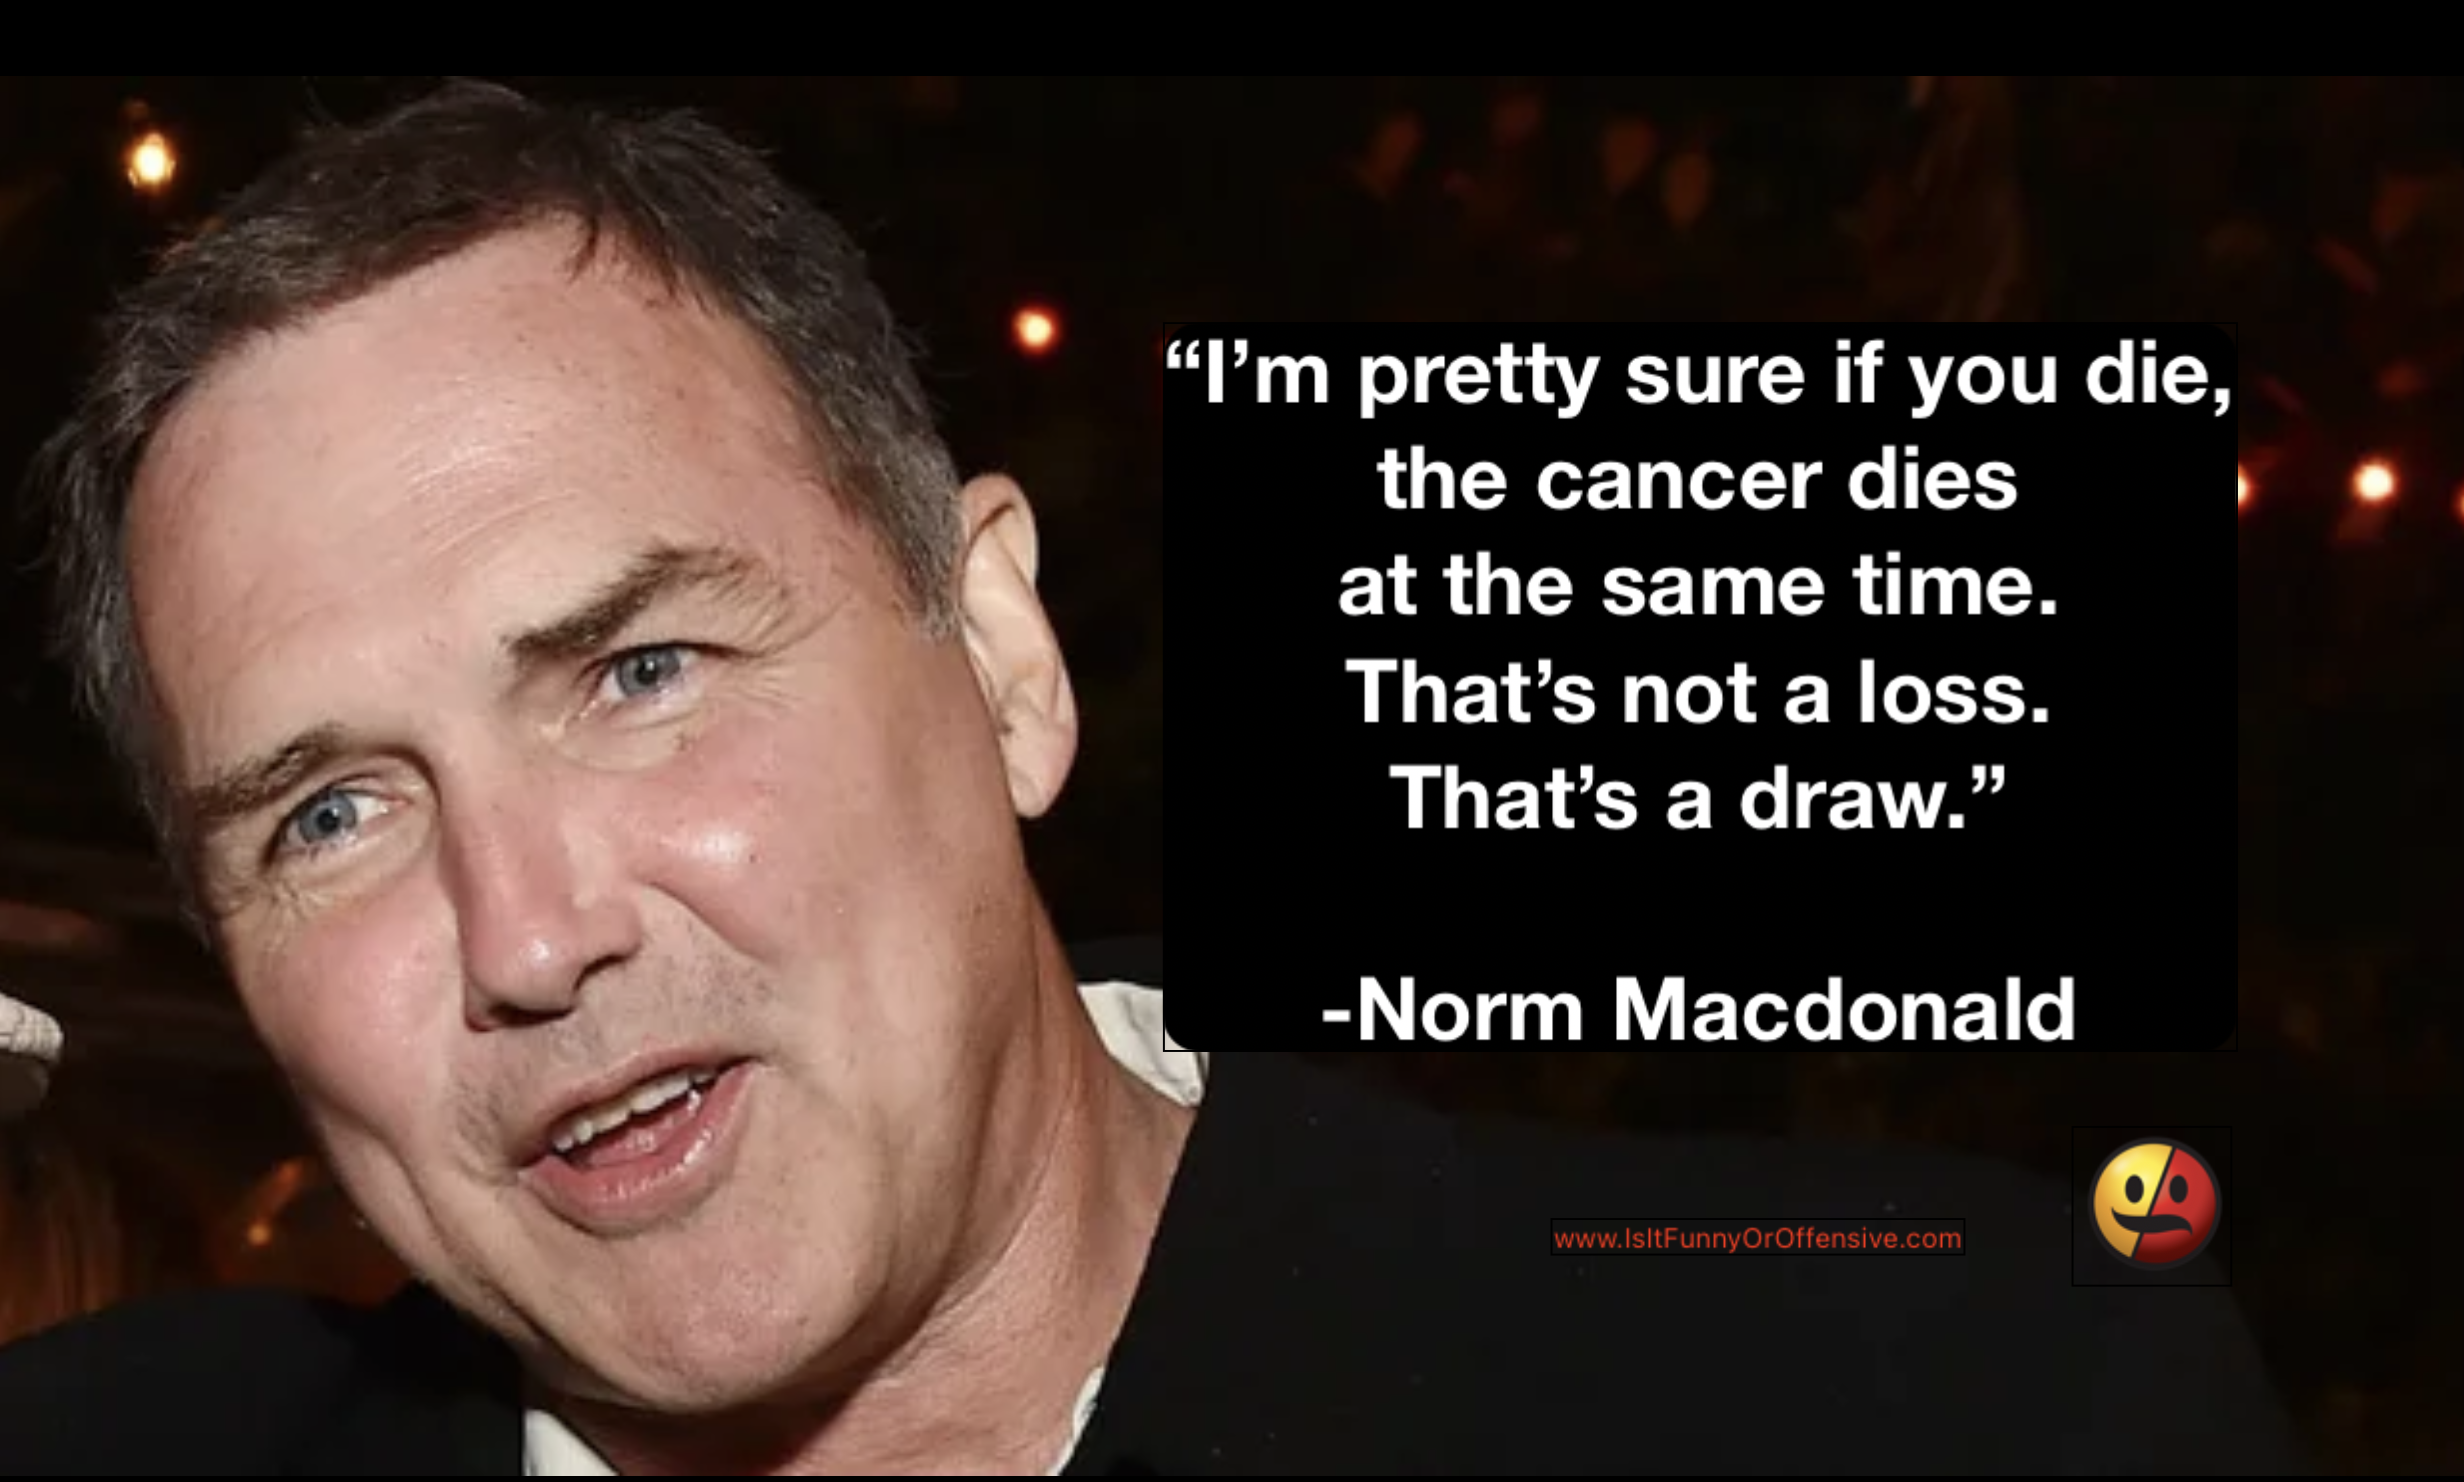 Norm Macdonald's Now Haunting Cancer Joke